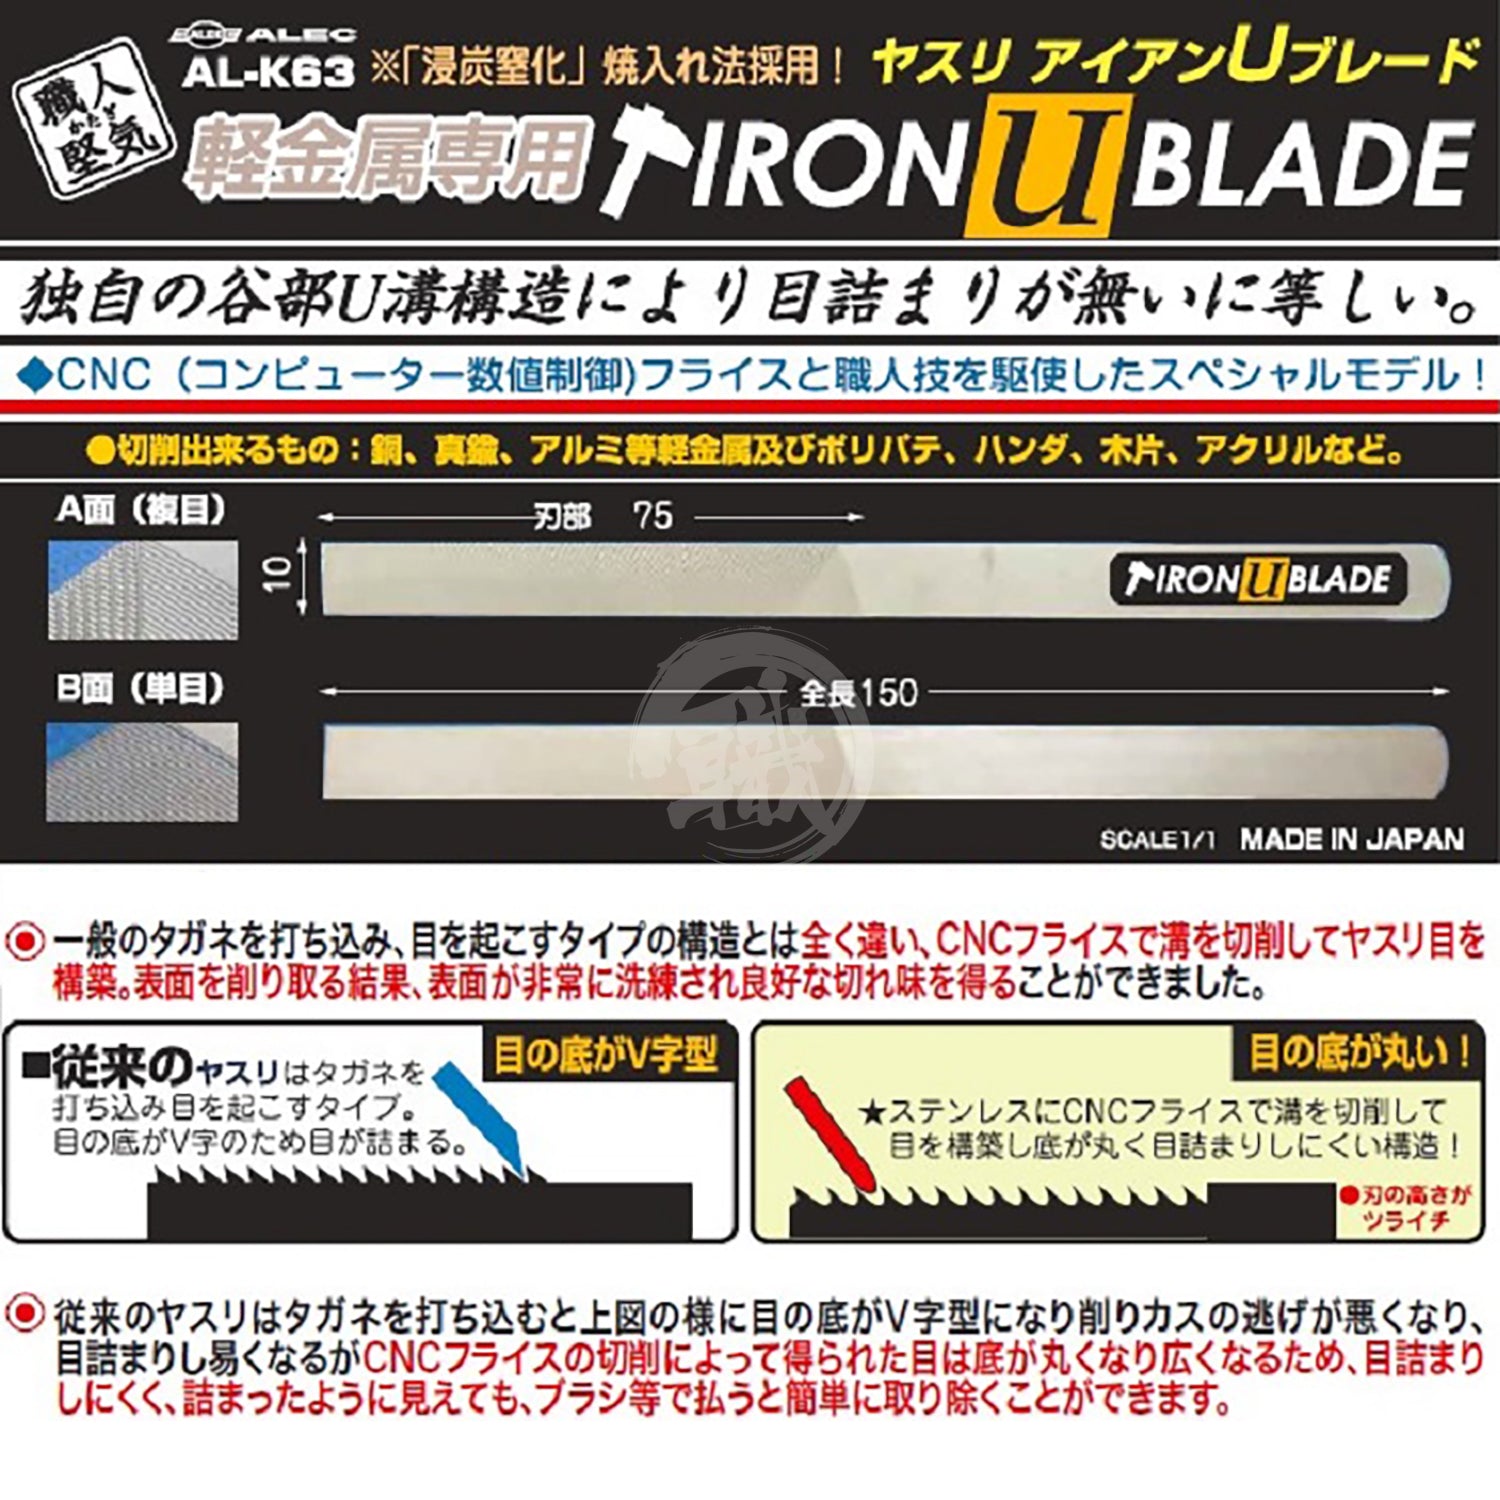 Shimomura ALEC - AL-K63 Iron U Blade - ShokuninGunpla